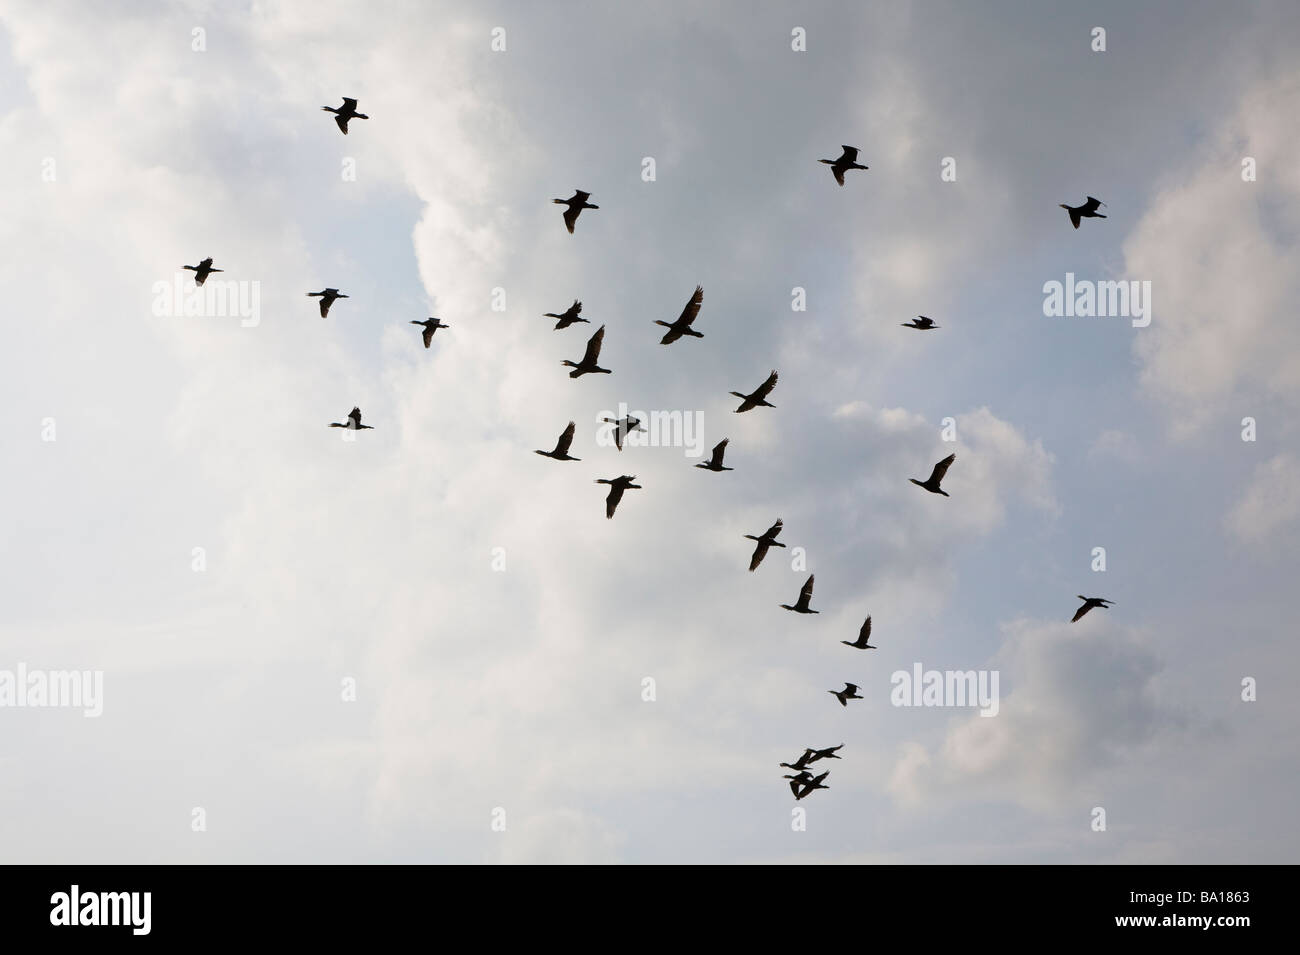 Flock of cormorants in silhouette flying over Markermeer Lelystad Netherlands Stock Photo